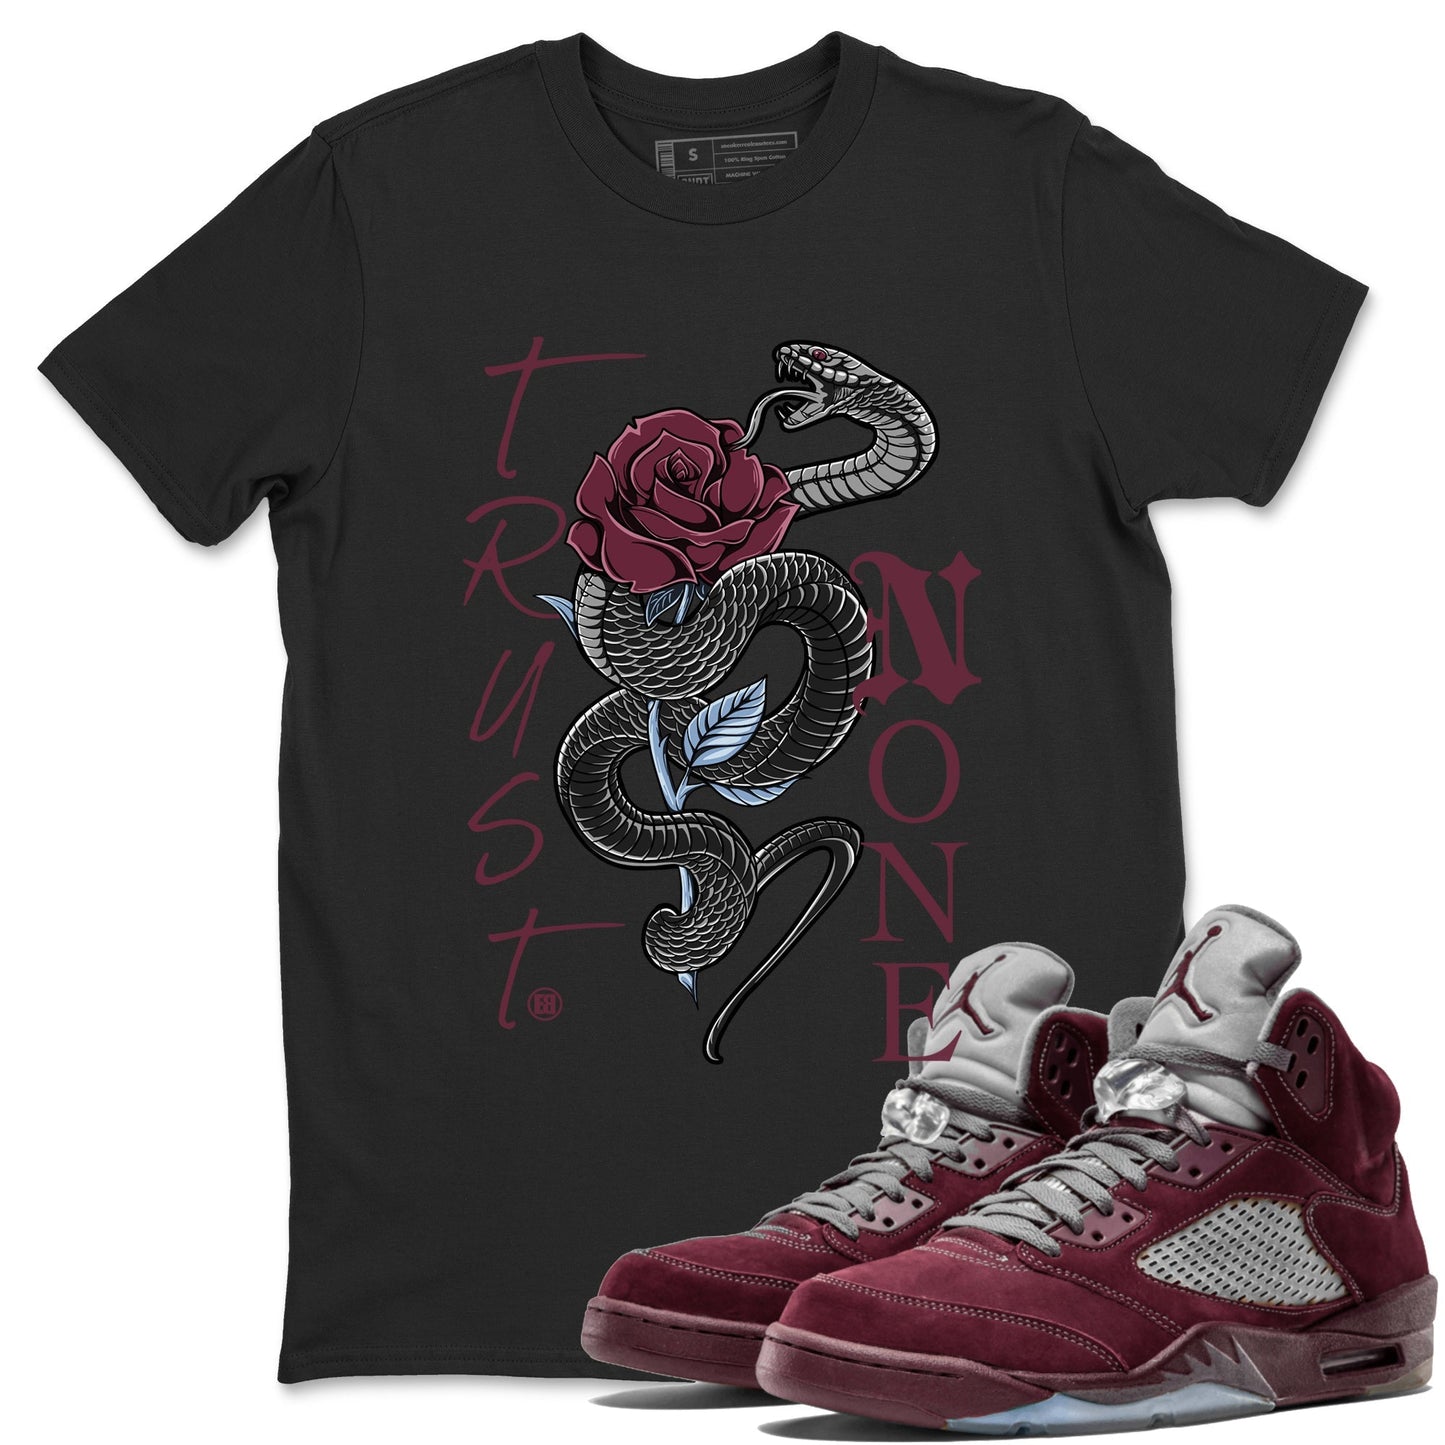 Jordan 5 Burgundy Shirts Trust None Sneaker Tees Air Jordan 5 Burgundy Sneaker Release Tees Unisex Shirts Black 1